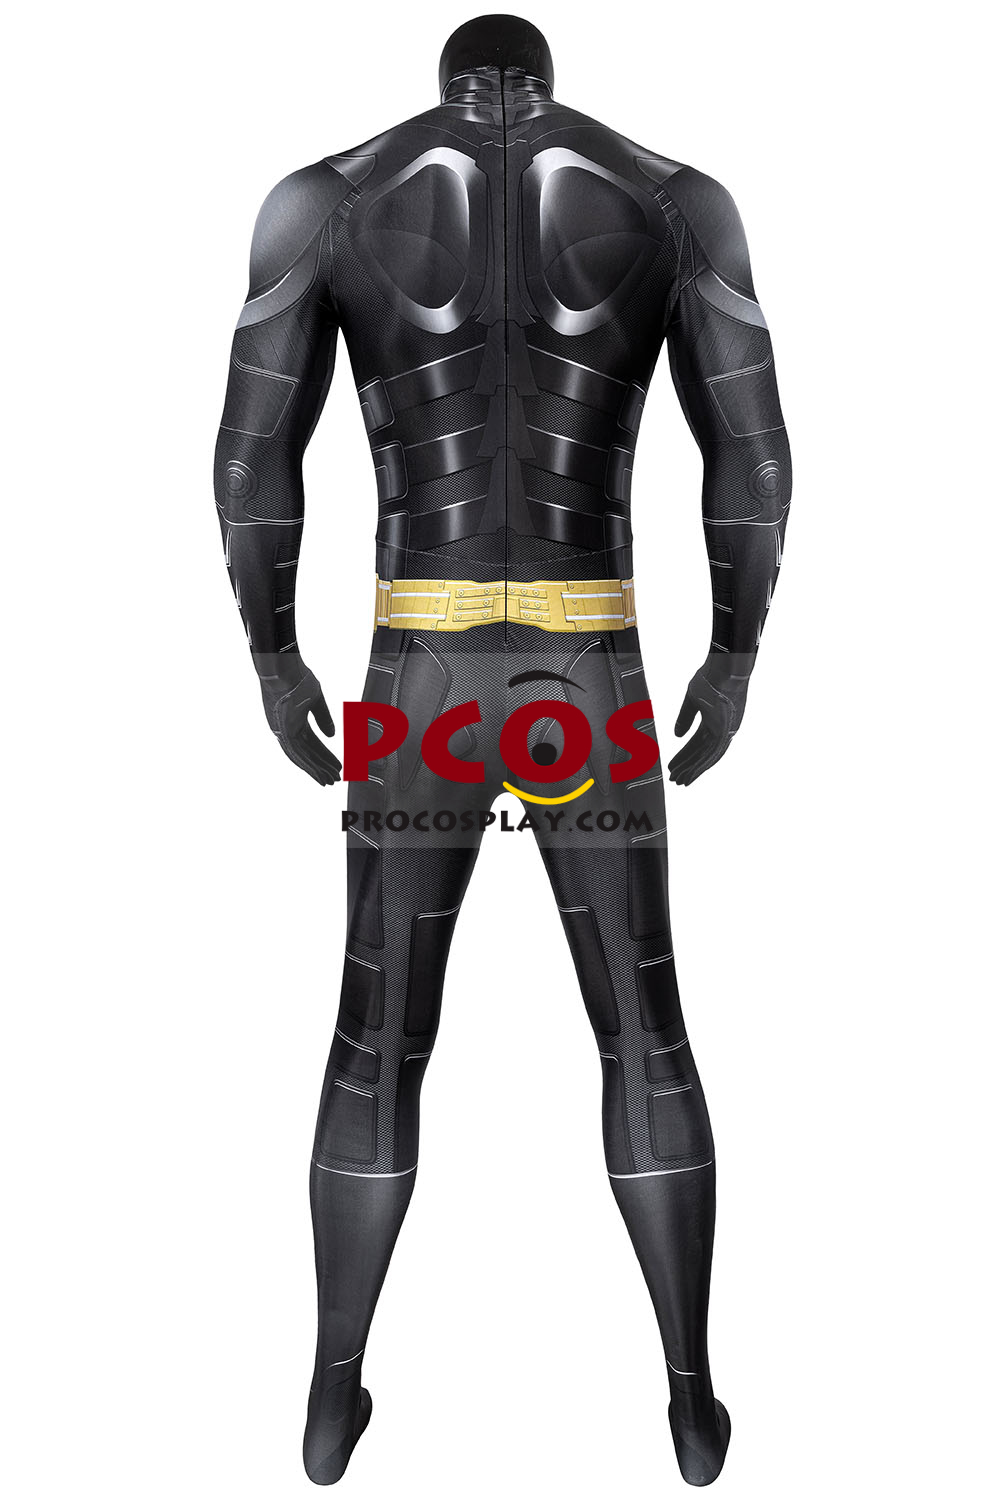 Batman The Dark Knight Rises Bruce Wayne Cosplay Costume Jumpsuit C00260 Best Profession 3879